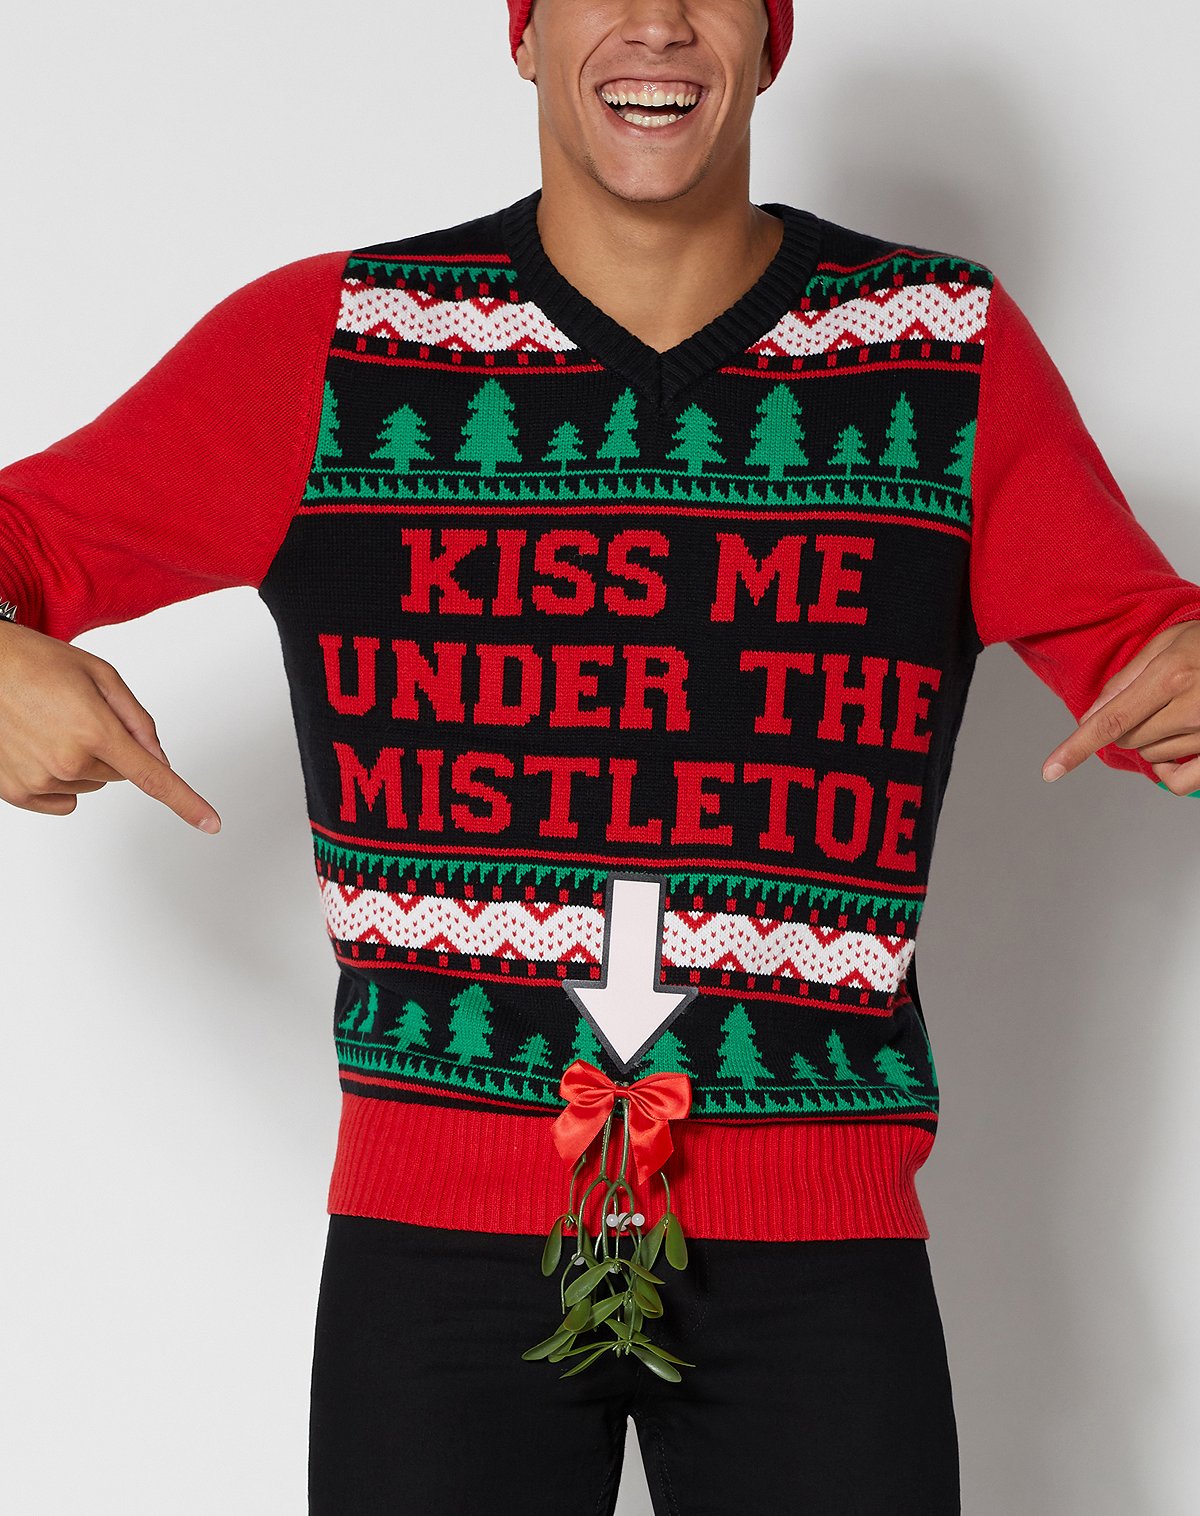 Spencer's Kiss Me Under The Mistletoe Ugly Christmas Sweater